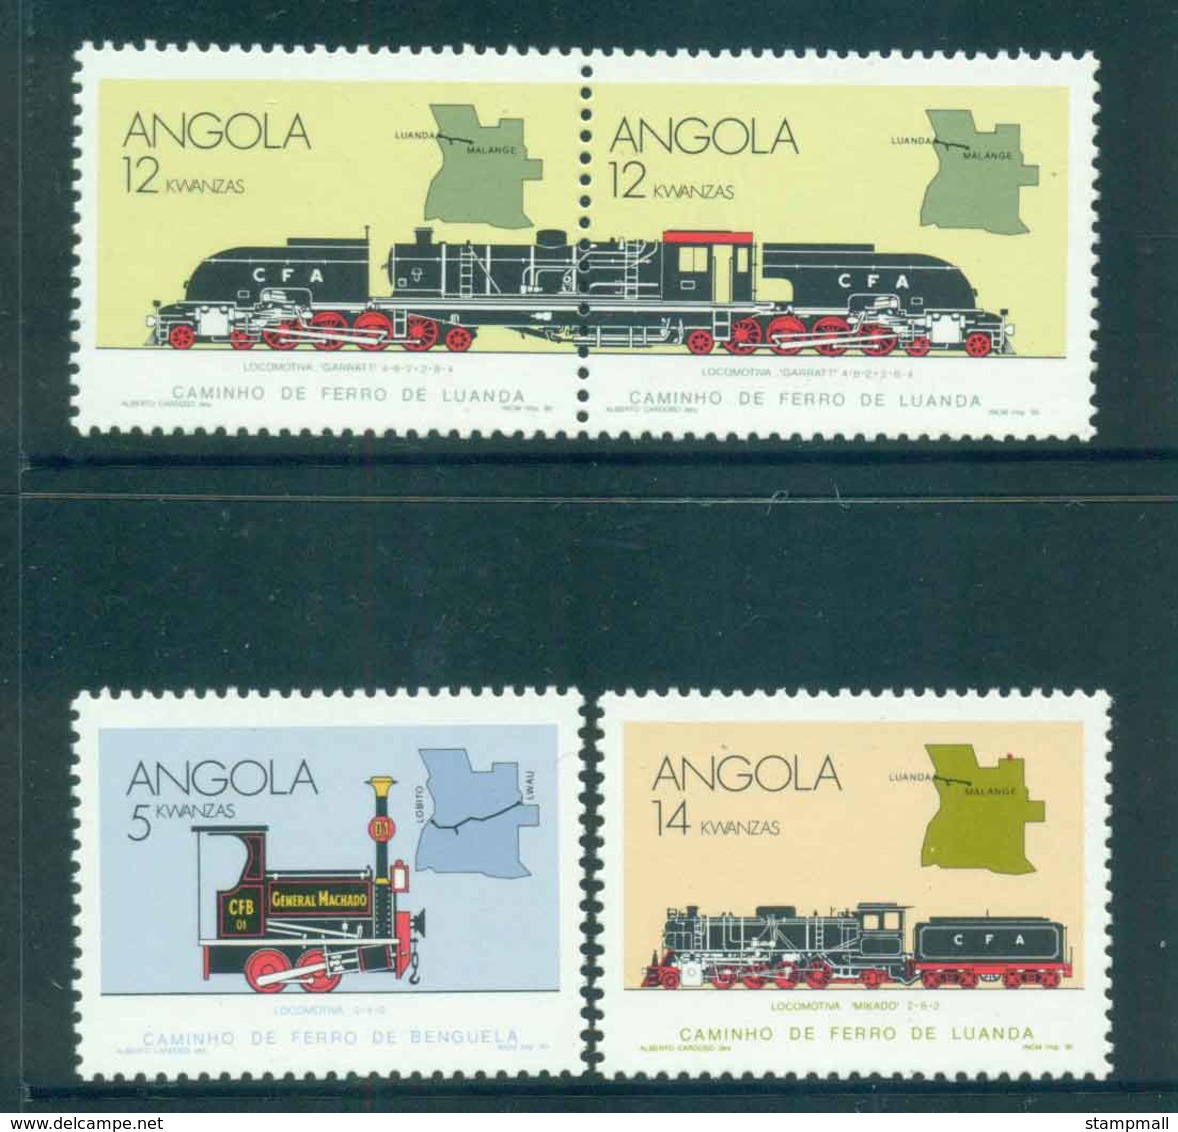 Angola 1990 Trains MUH Lot51891 - Angola